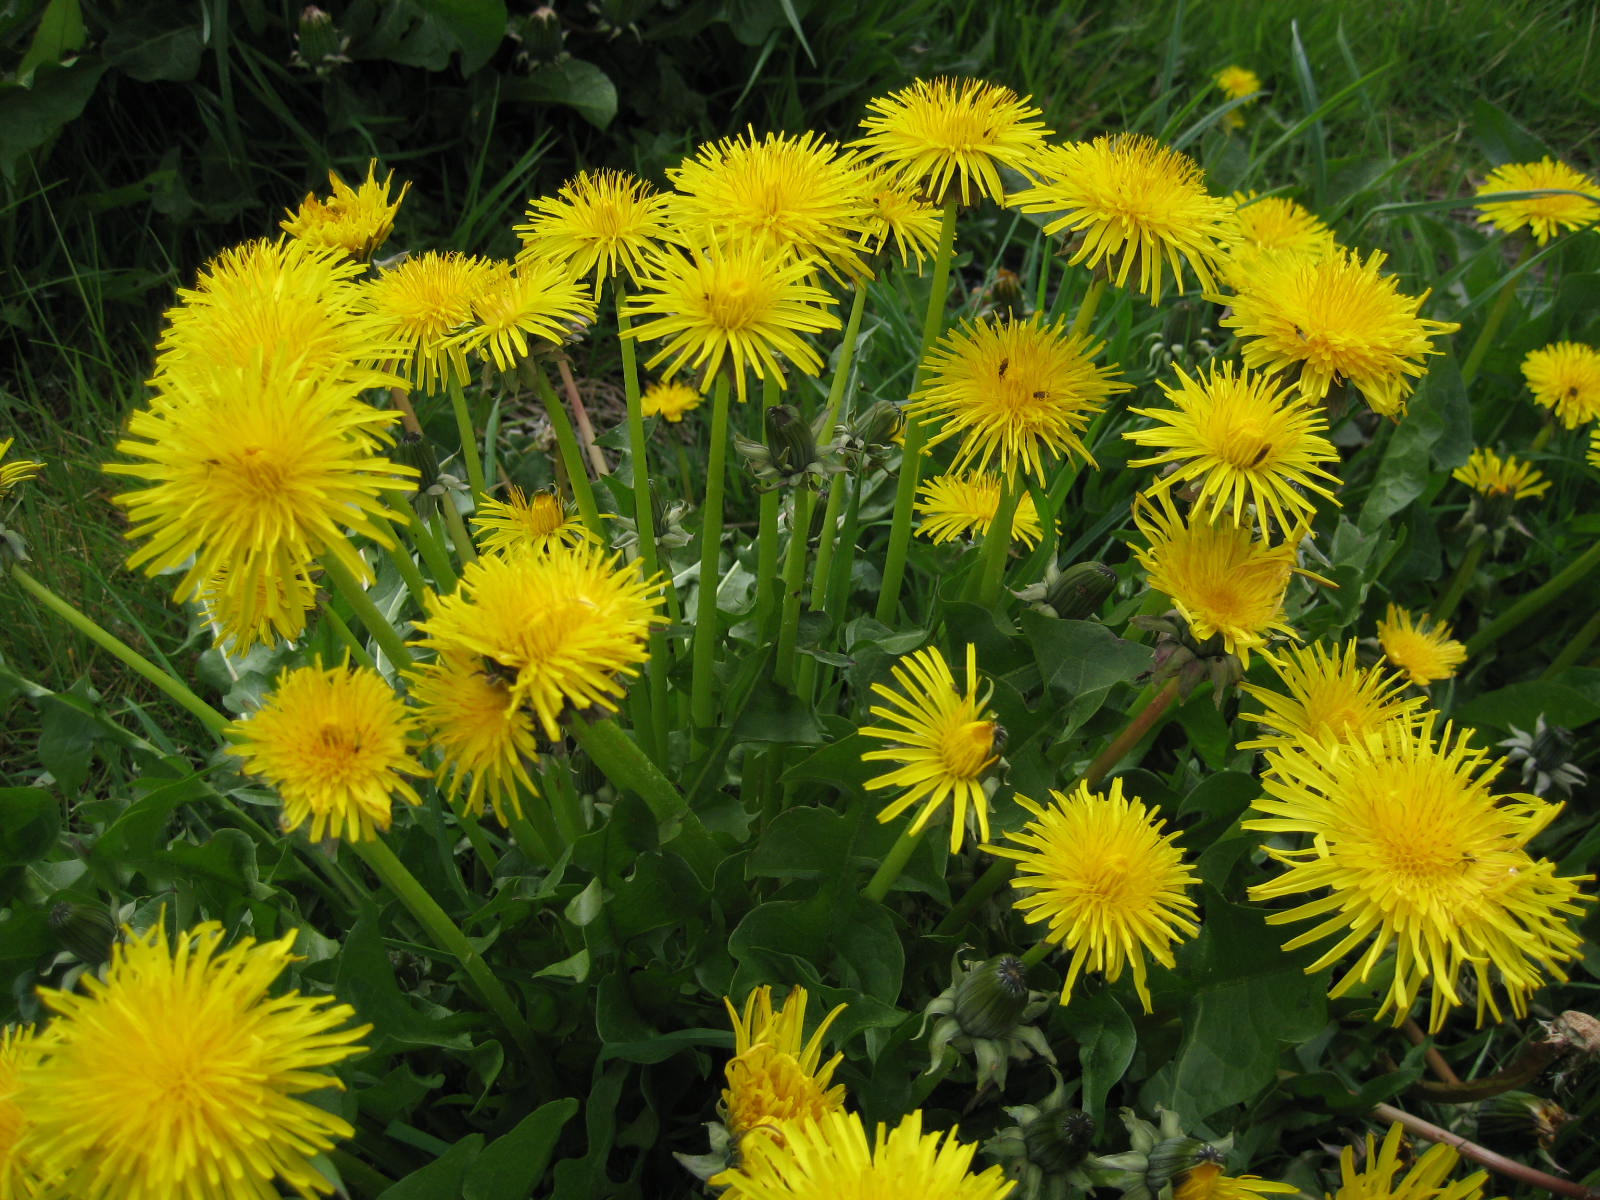 5 weeds that have proven health benefits